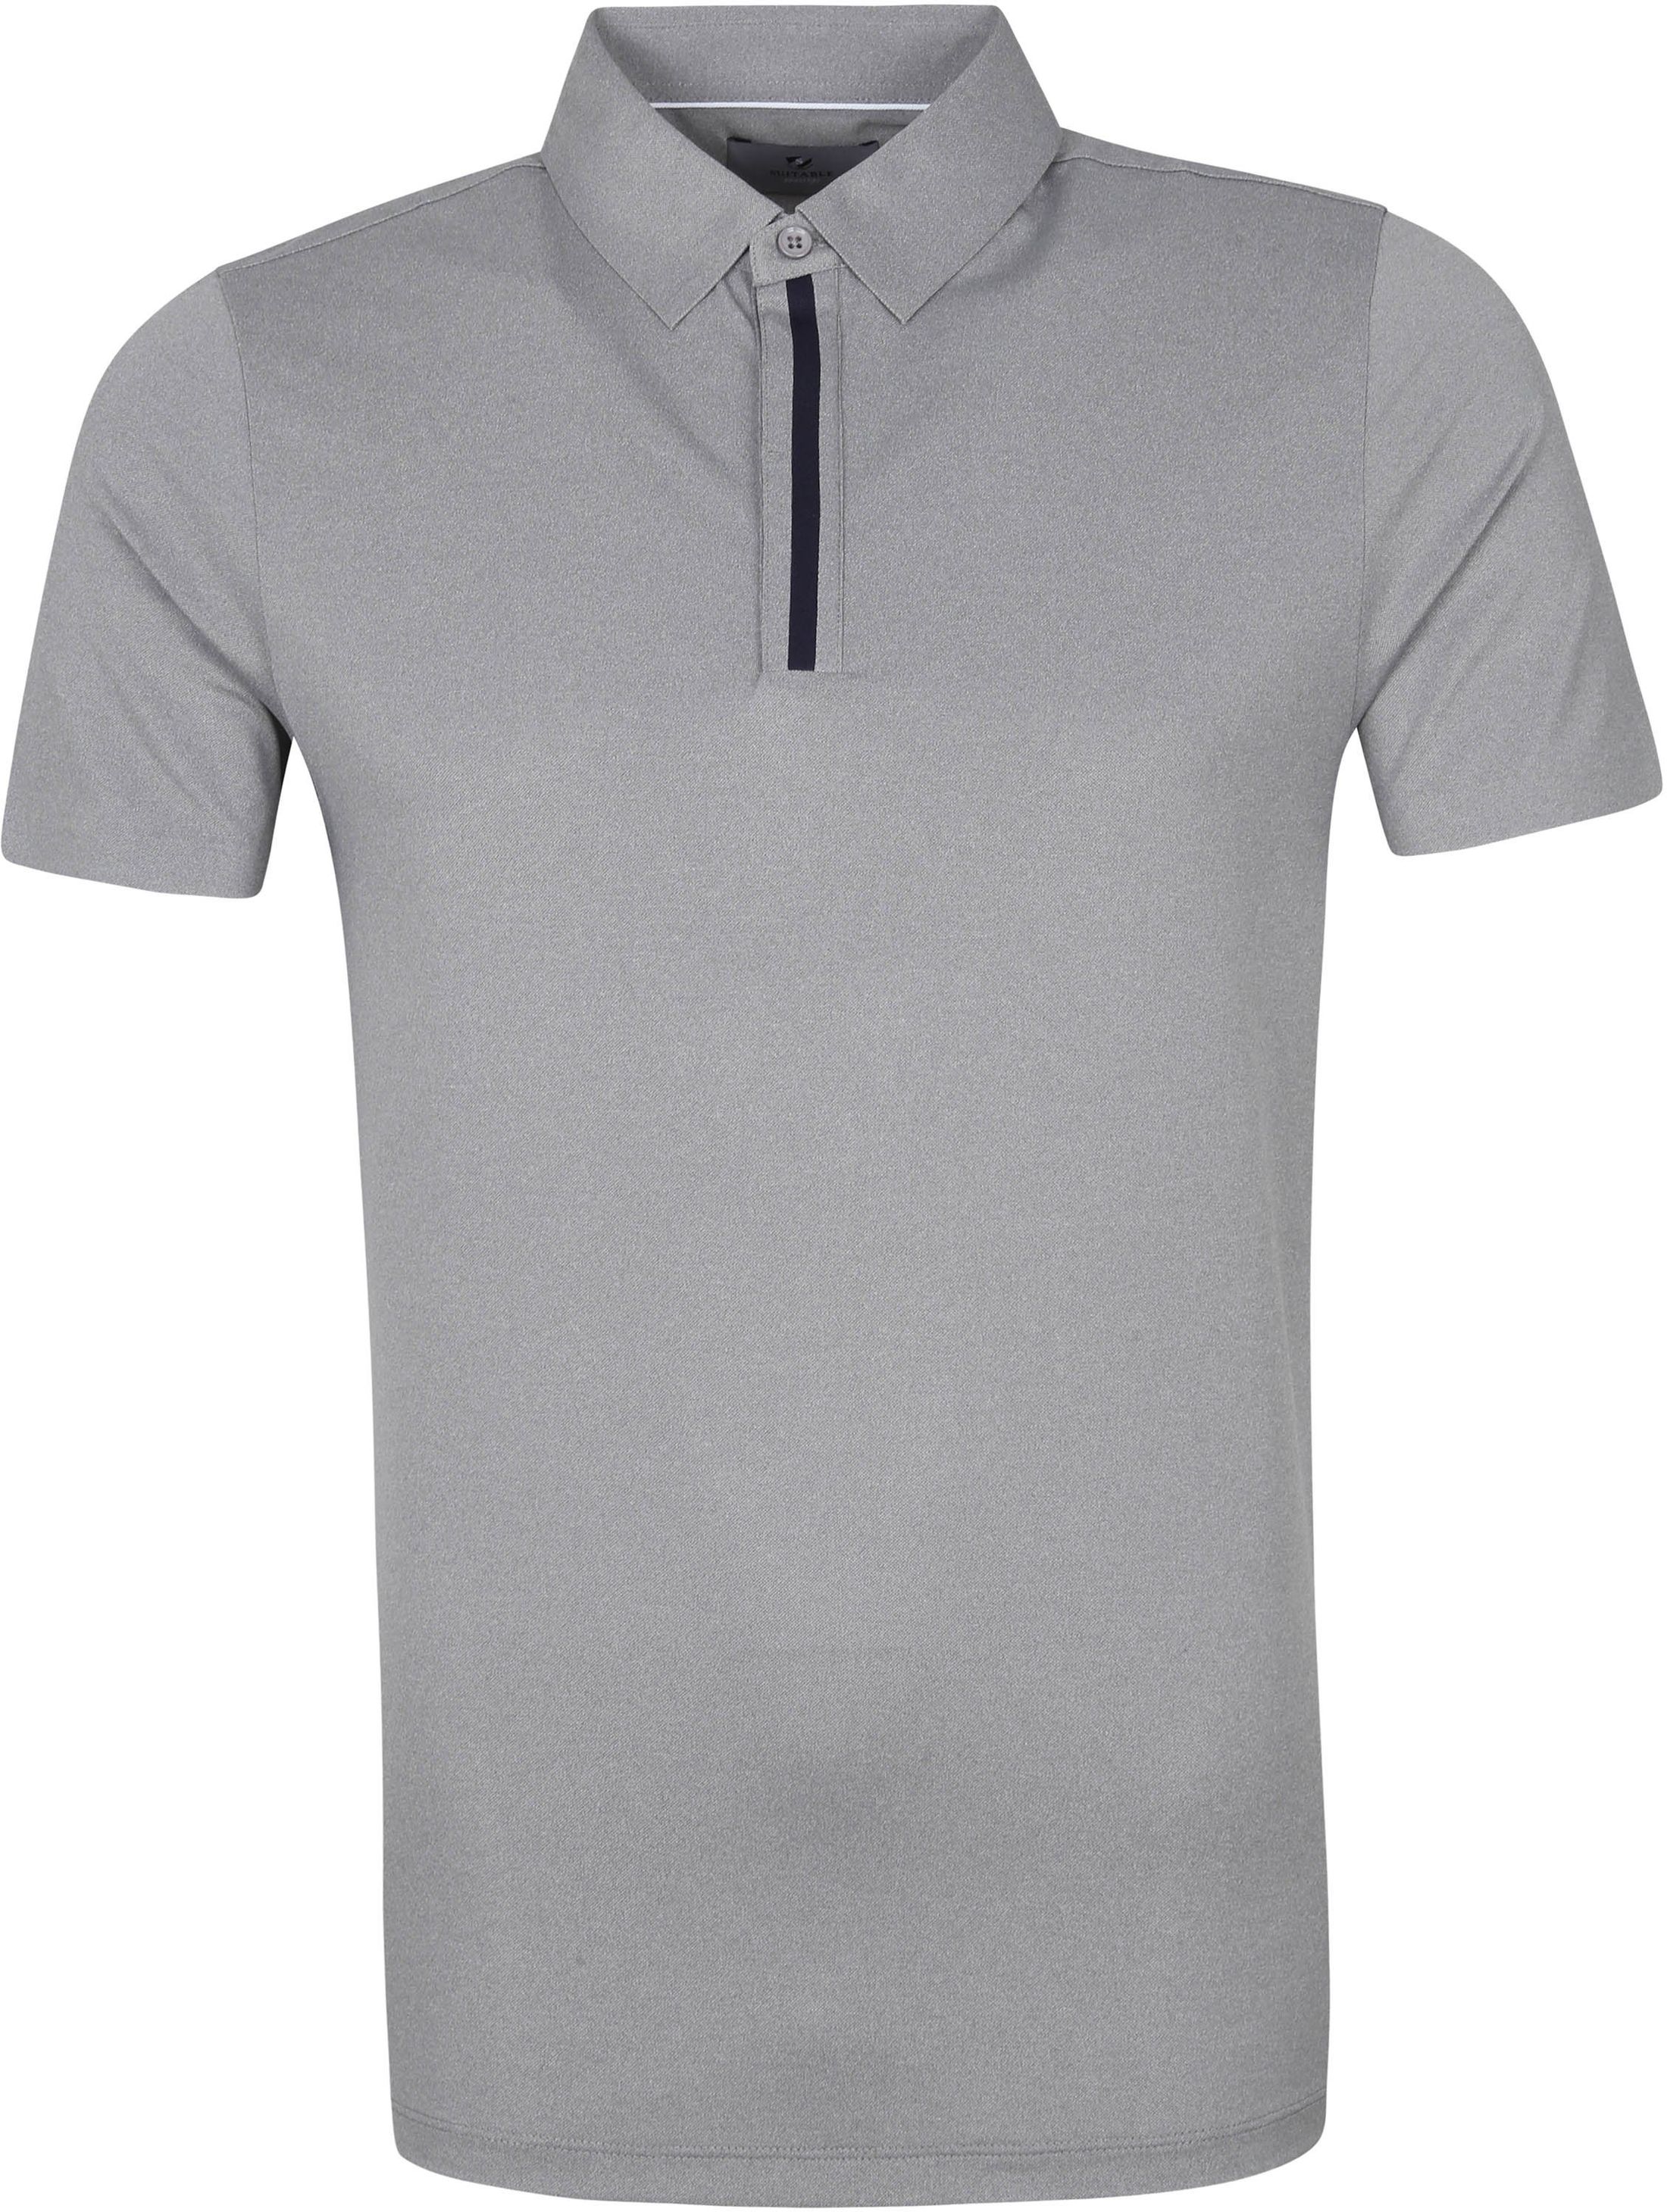 Suitable Prestige Iggy Polo Shirt Grey size M